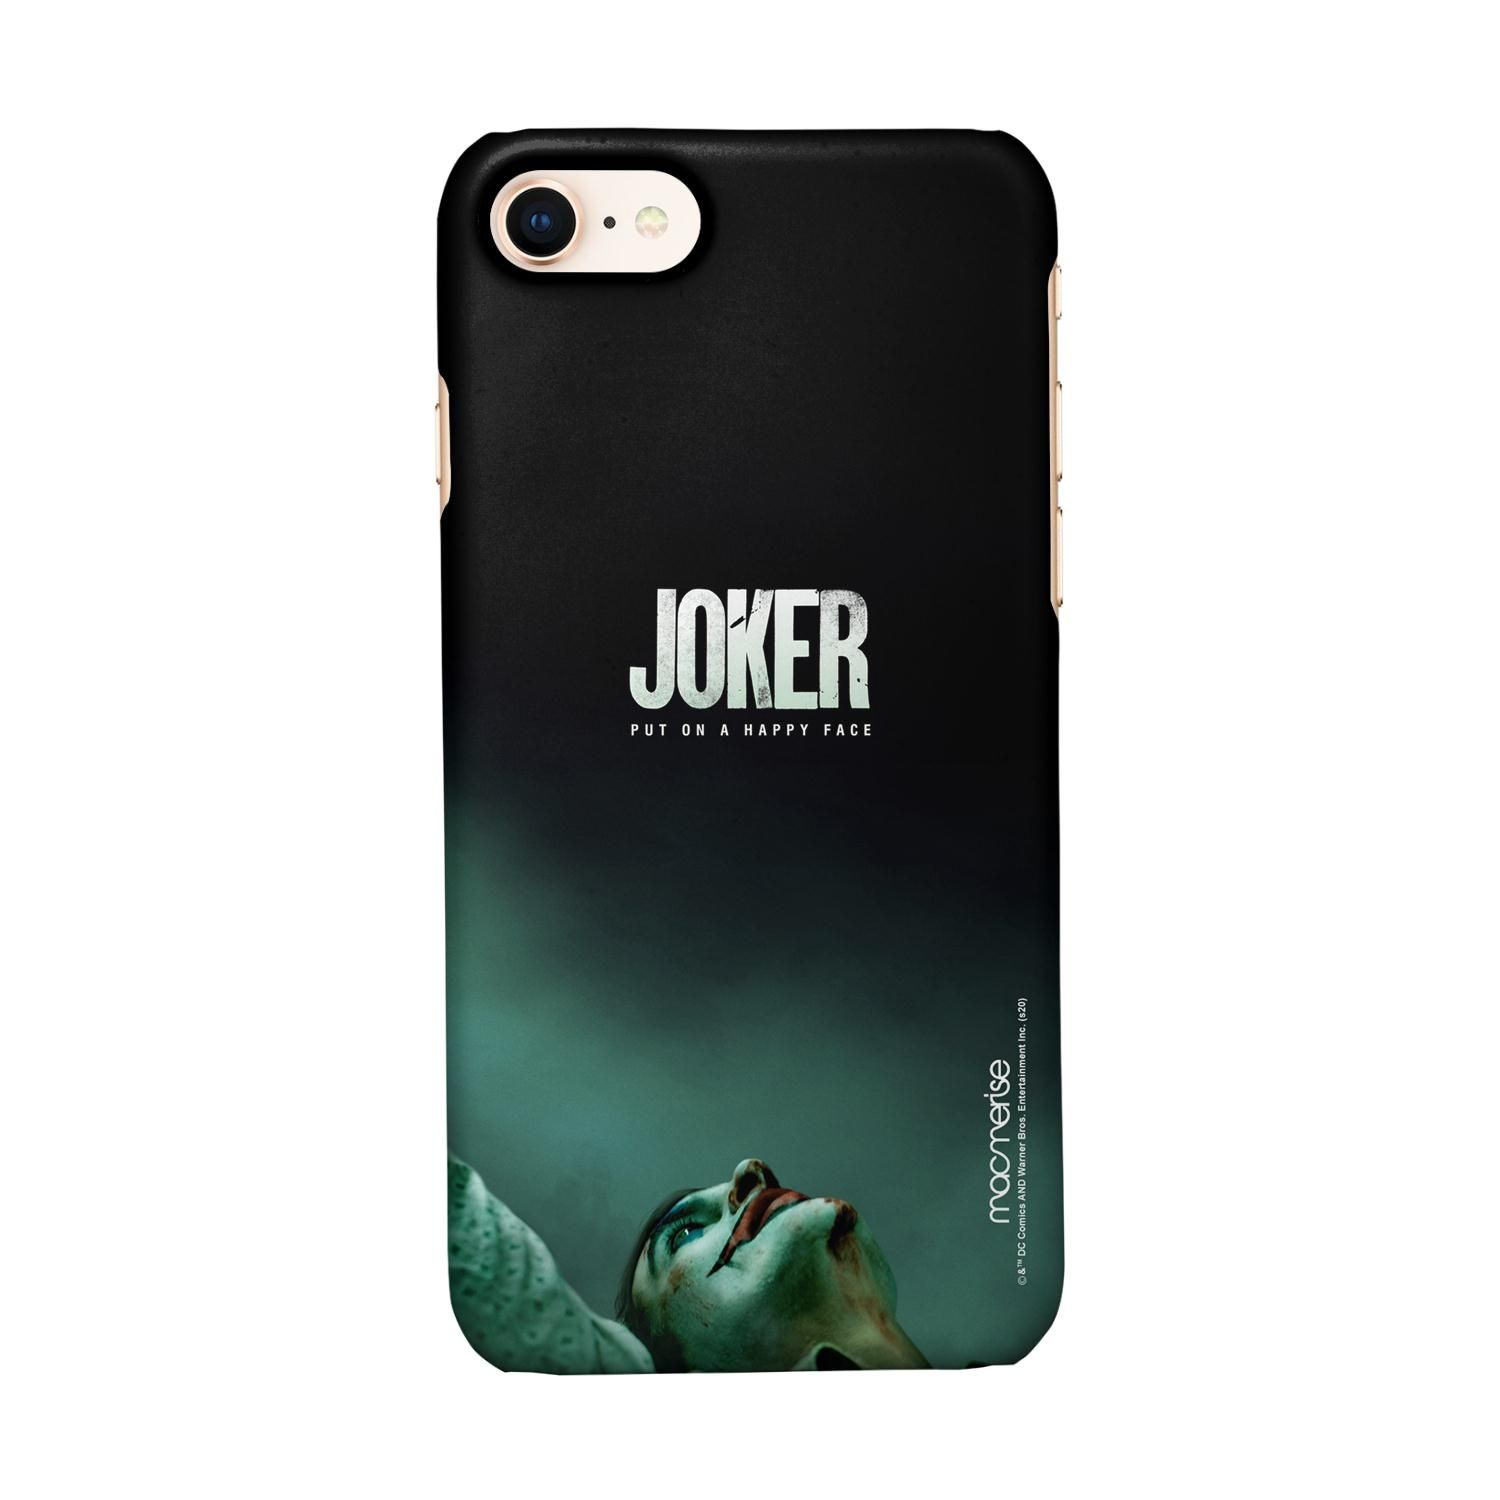 Rise of the Joker - Sleek Phone Case for iPhone 8